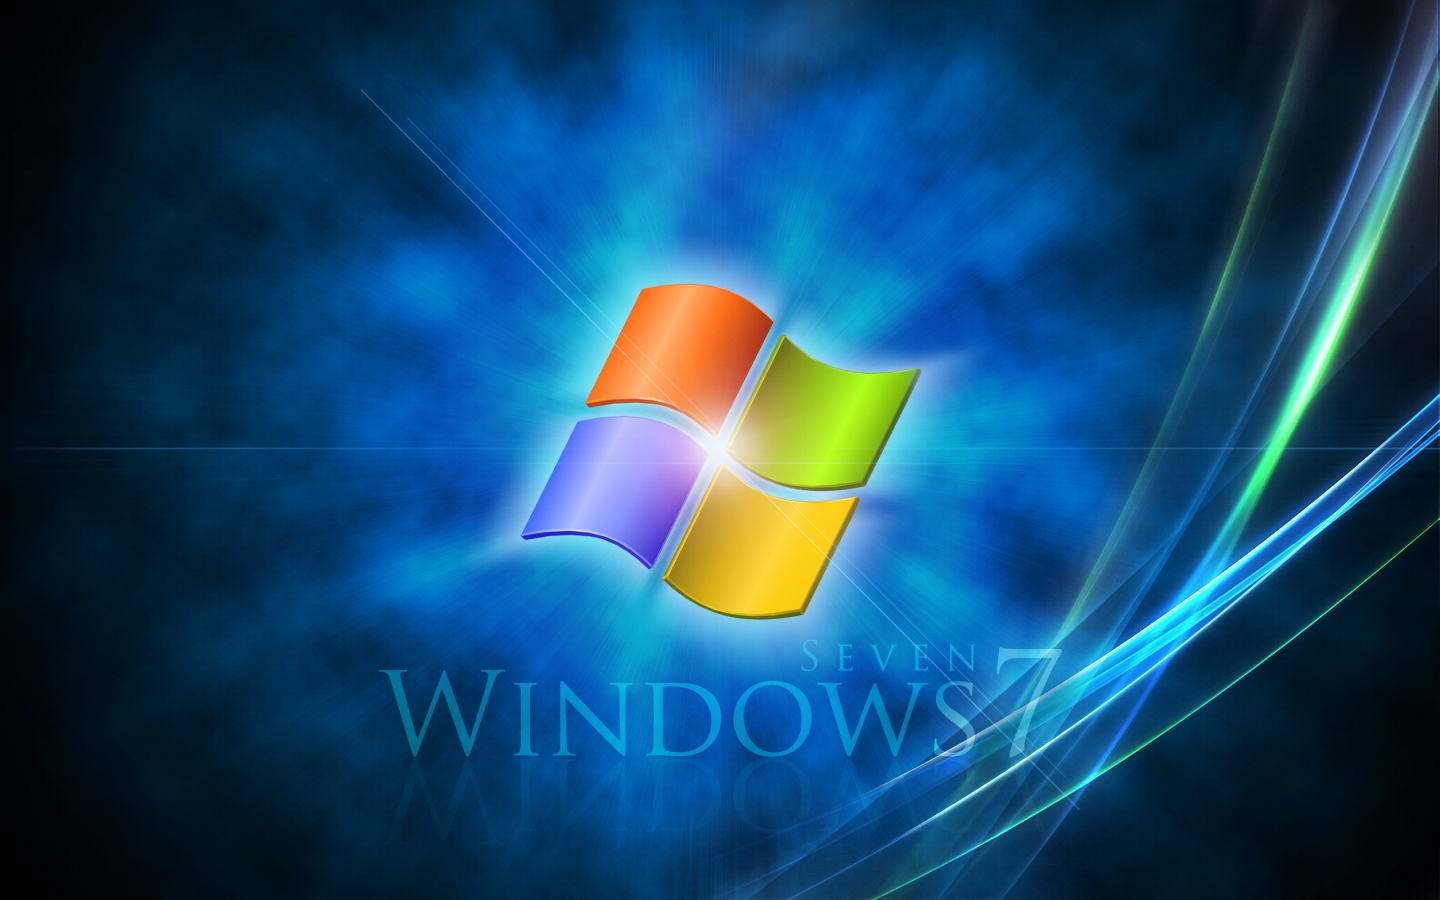 Windows 7 Light Rays for 1440 x 900 widescreen resolution